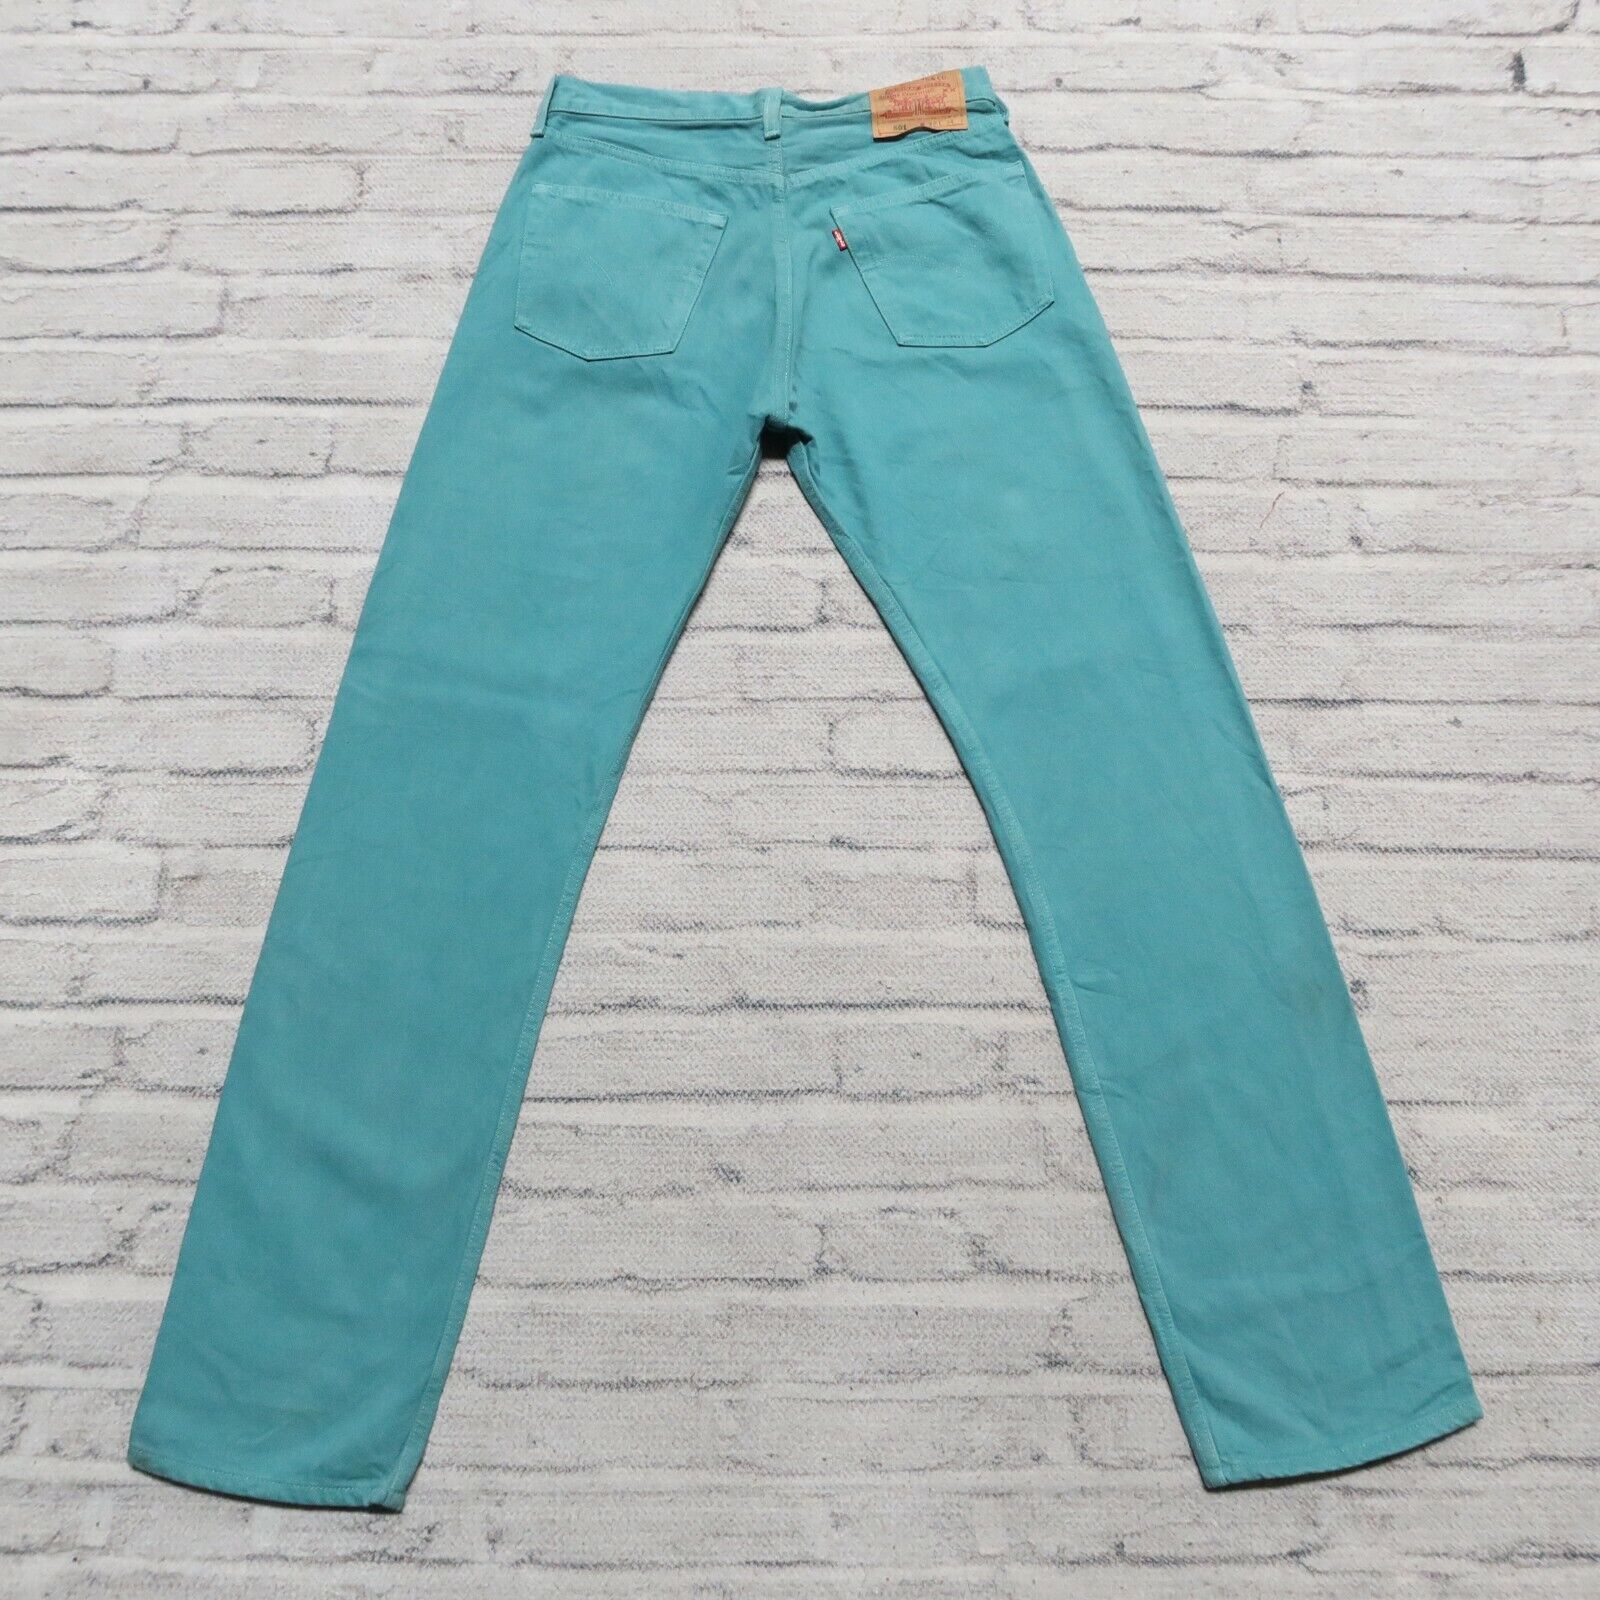 Vintage 90s Levis 501 Denim Jeans Made in USA Size 30 31 Teal 